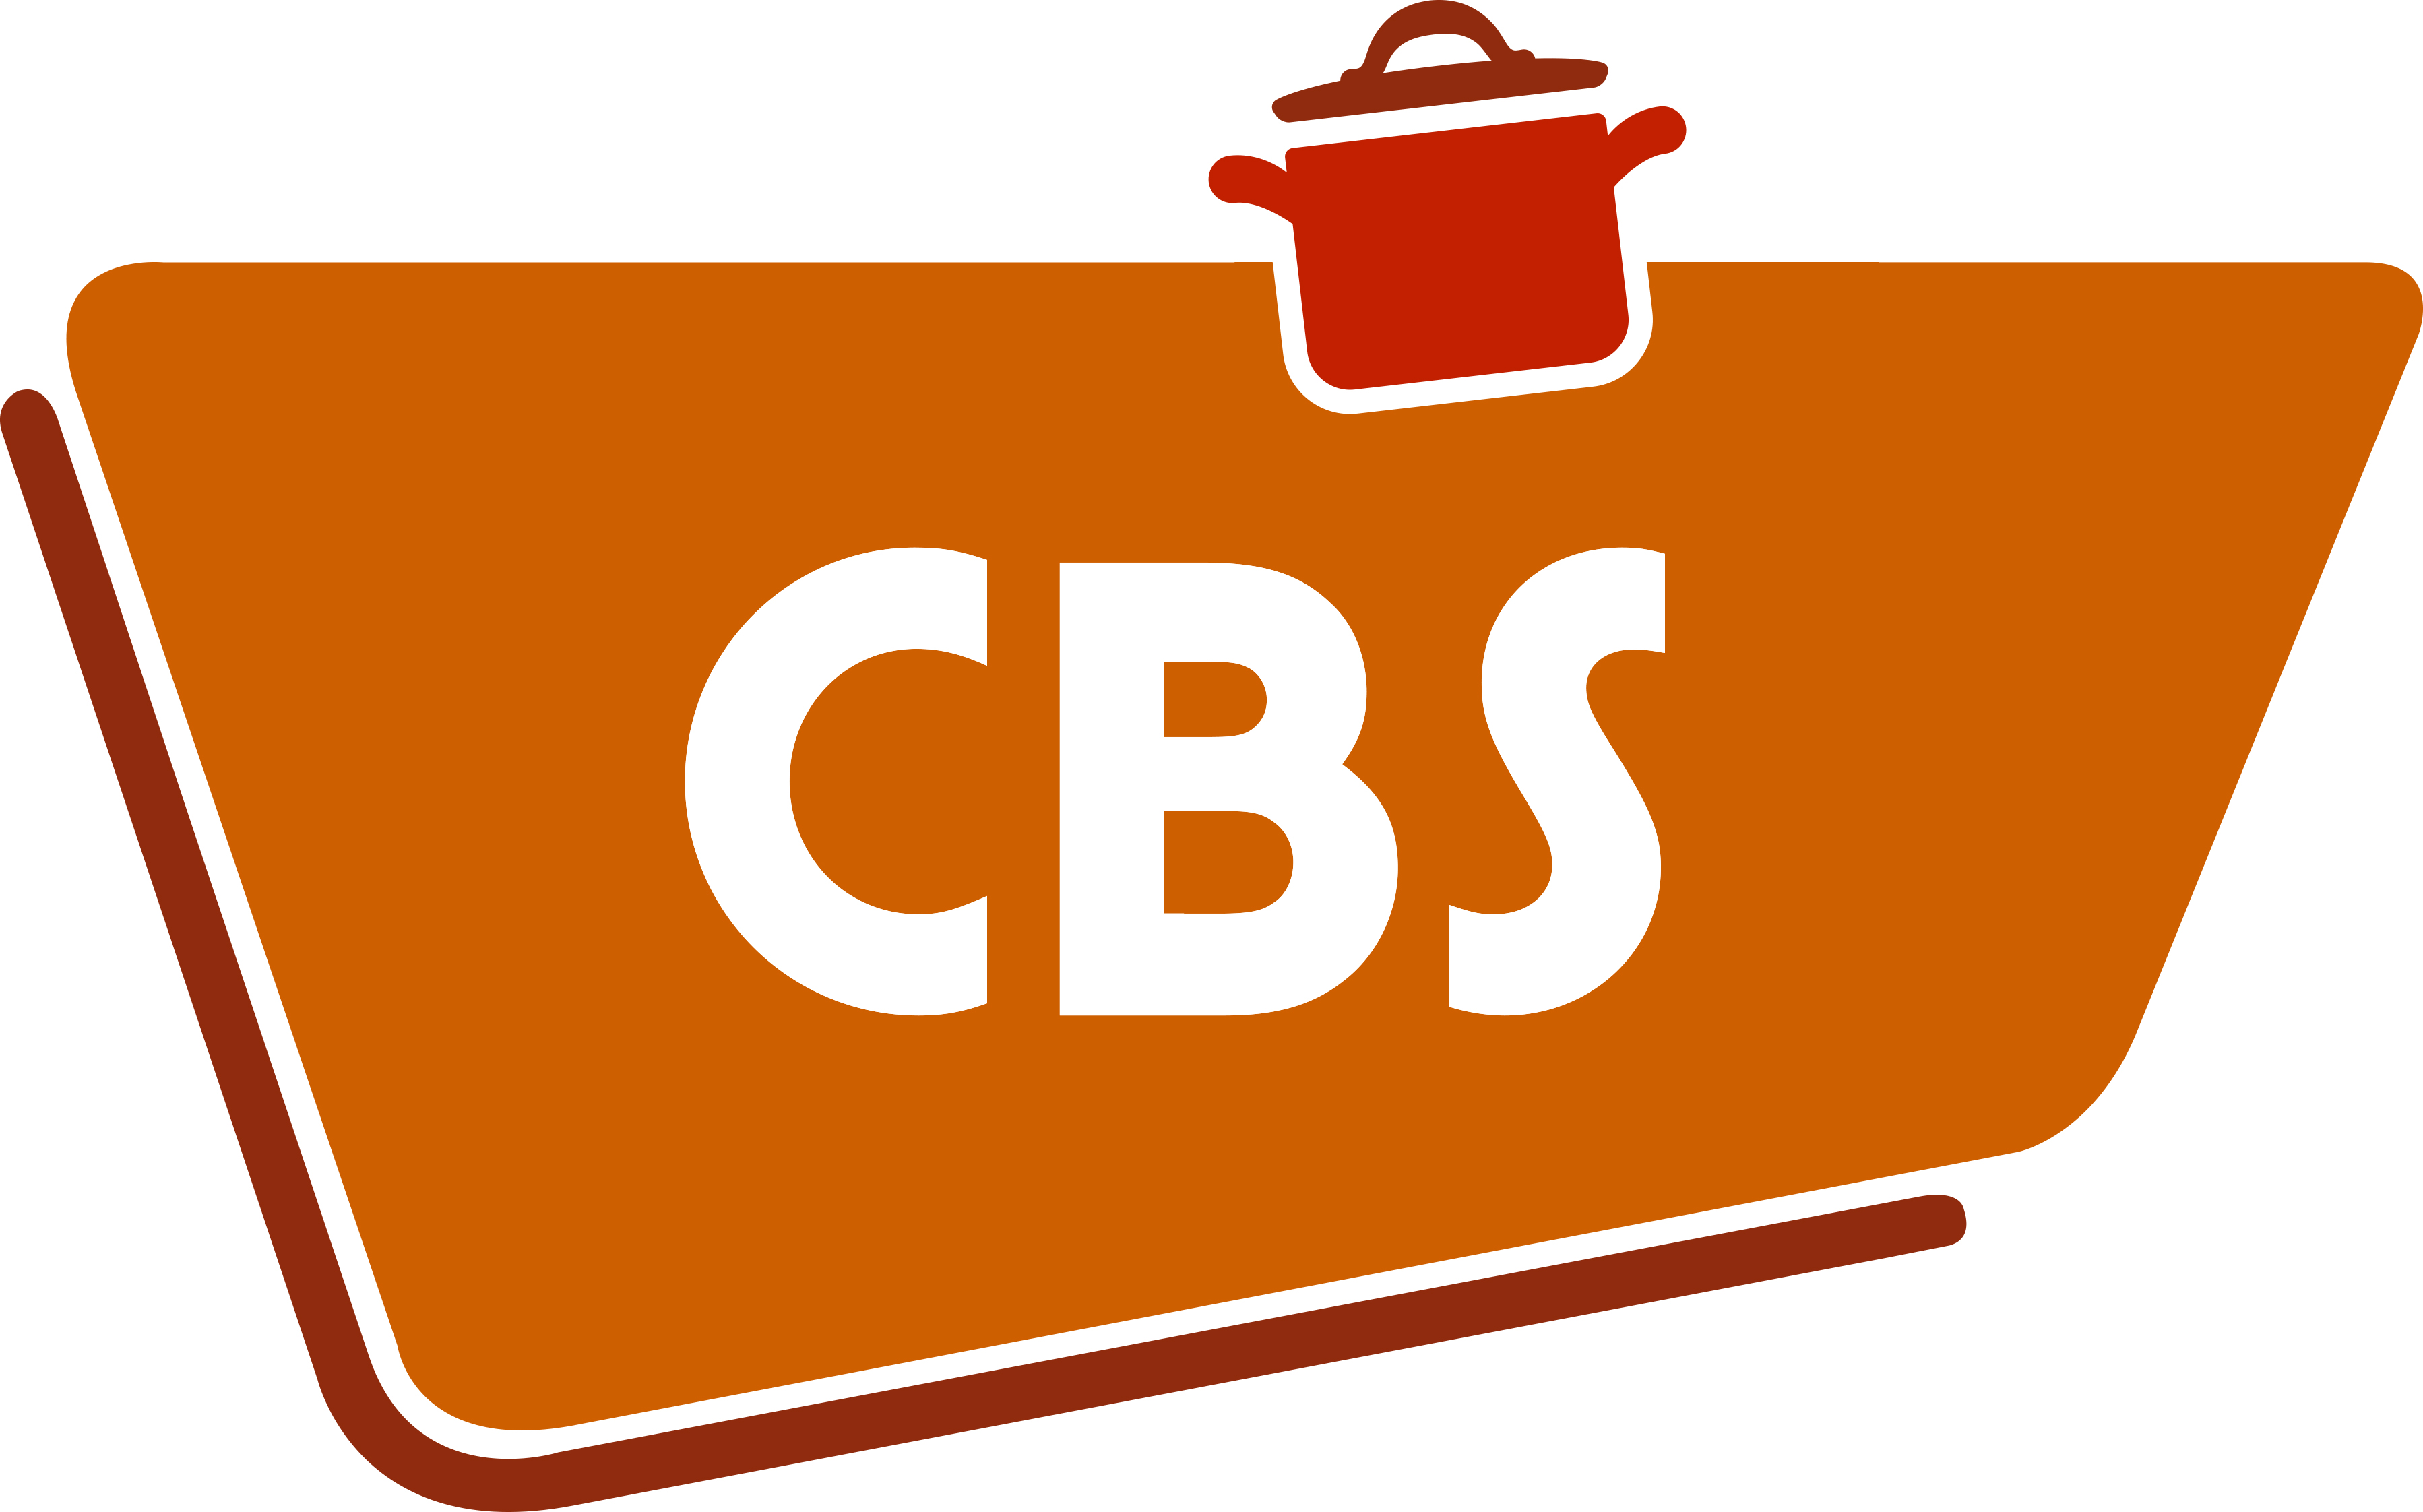 Logo CBS